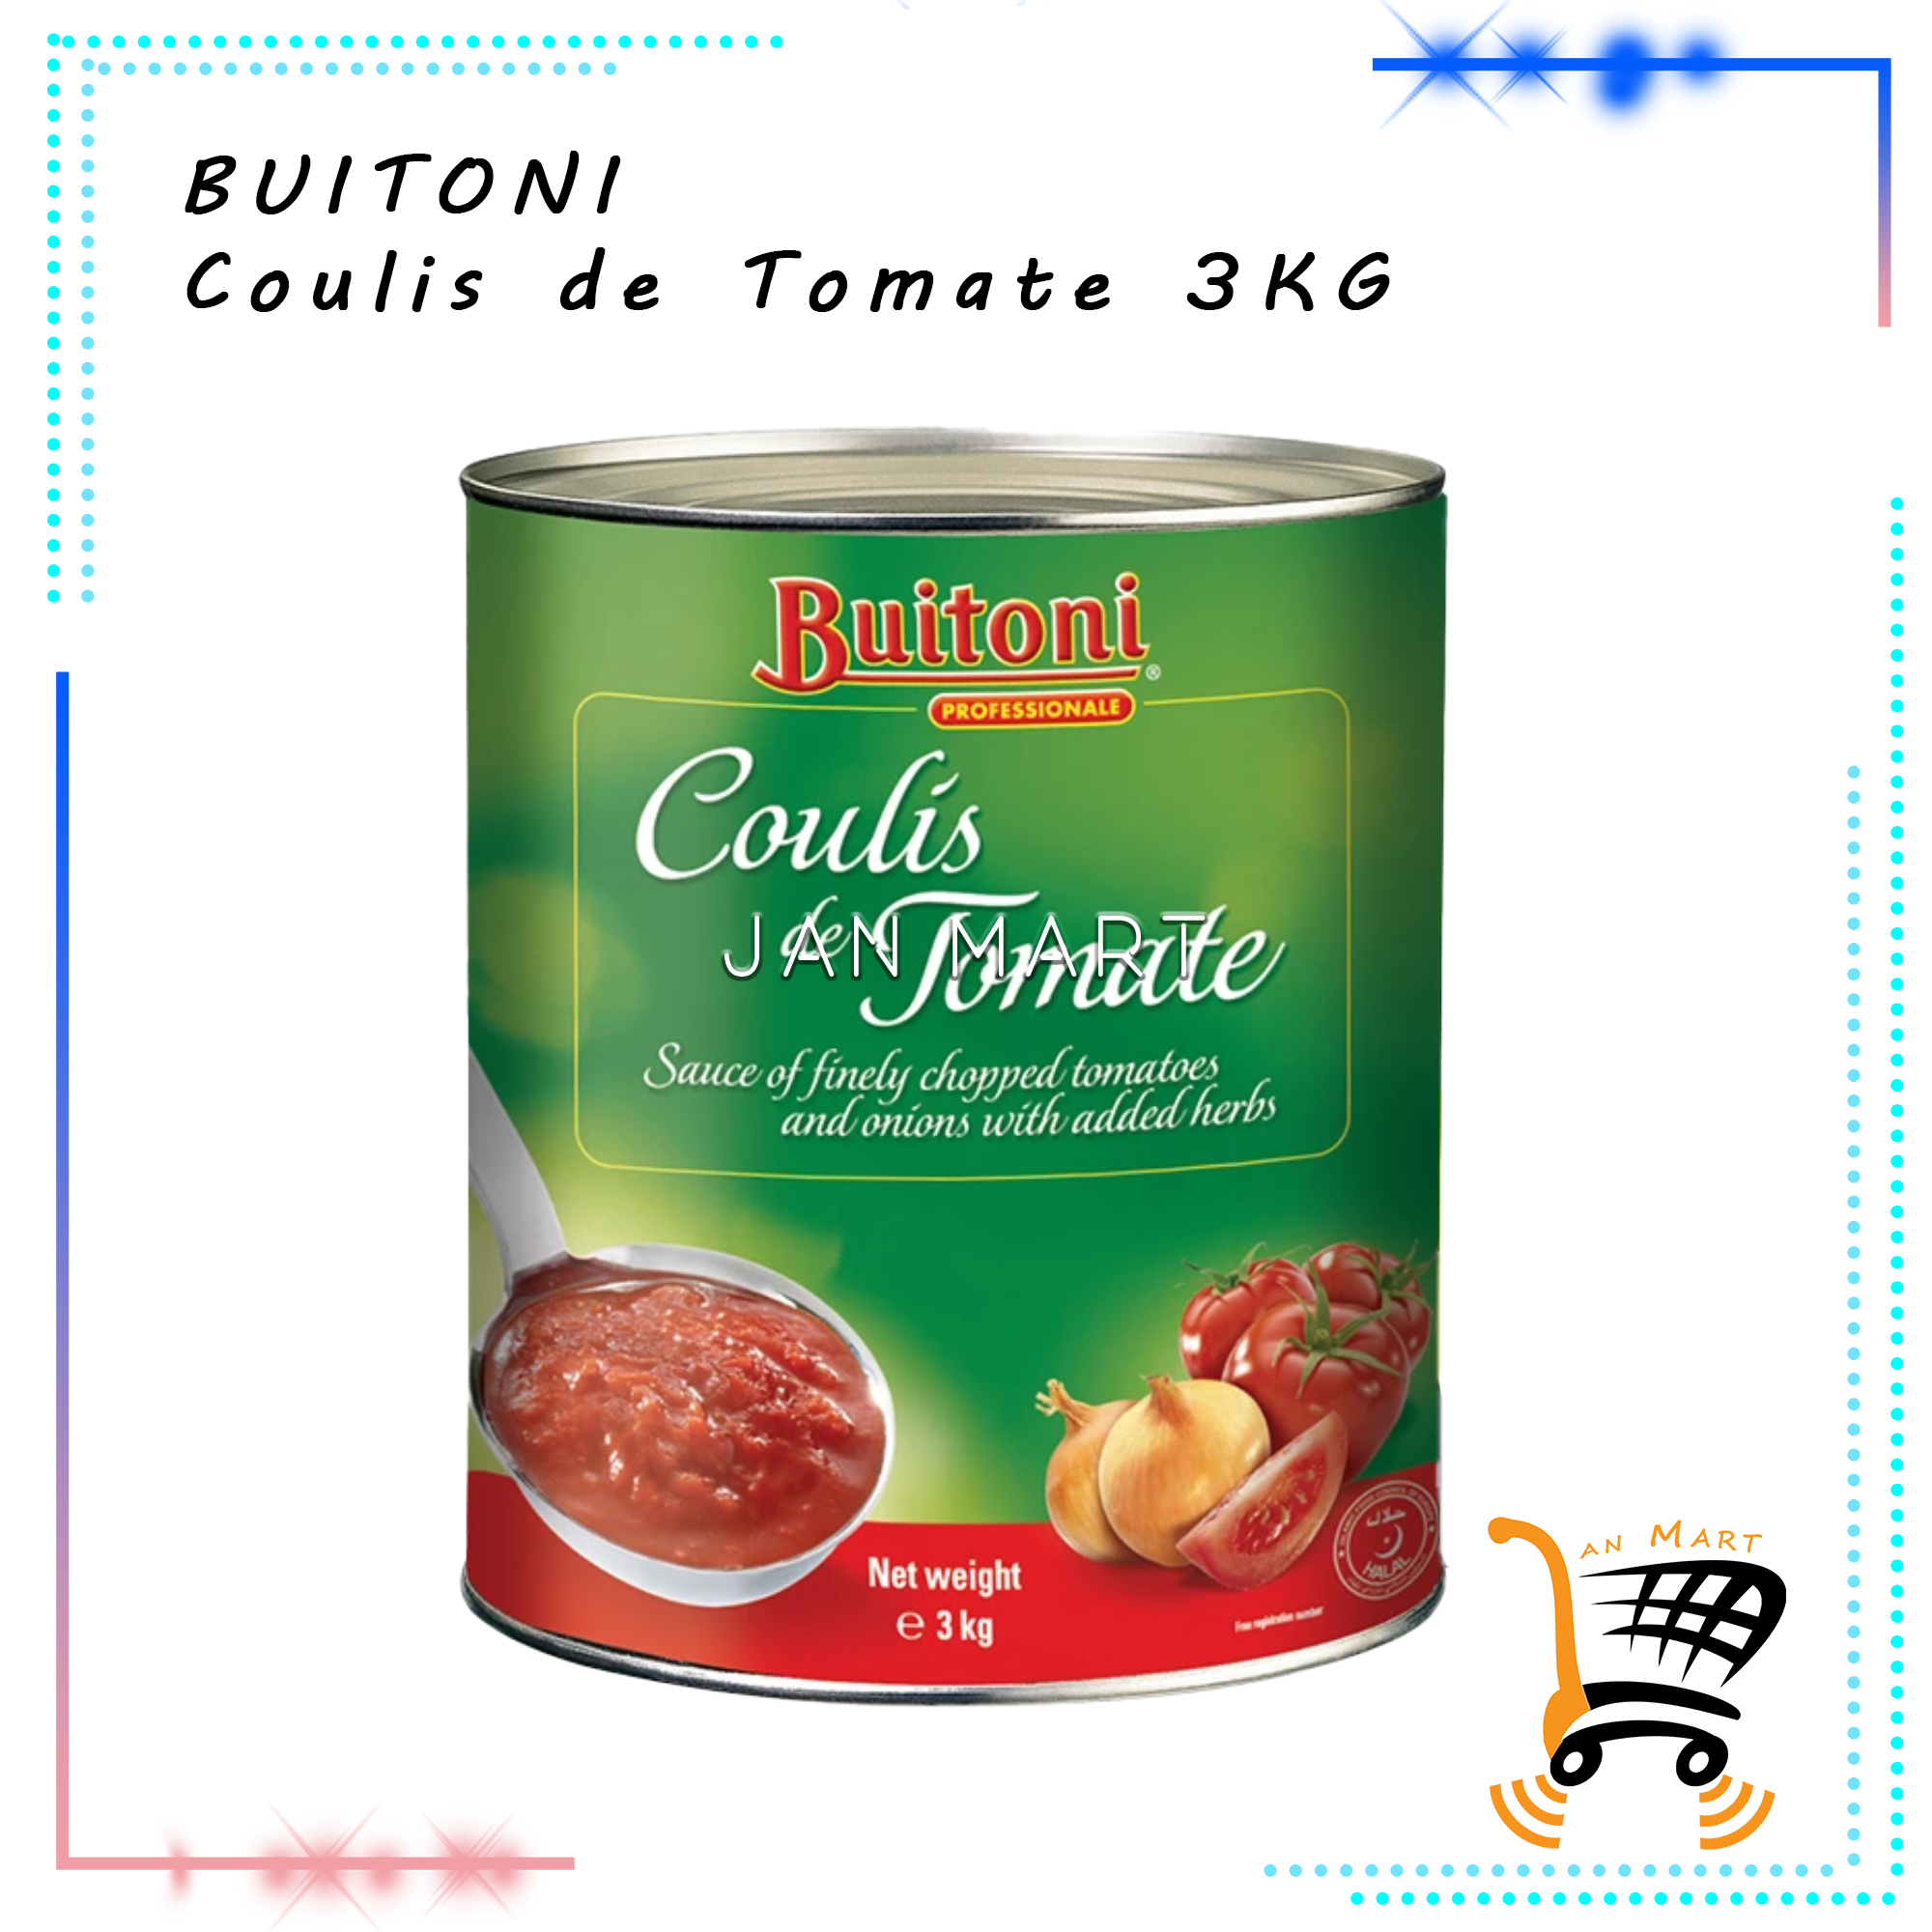 BUITONI Coulis de Tomate 3KG